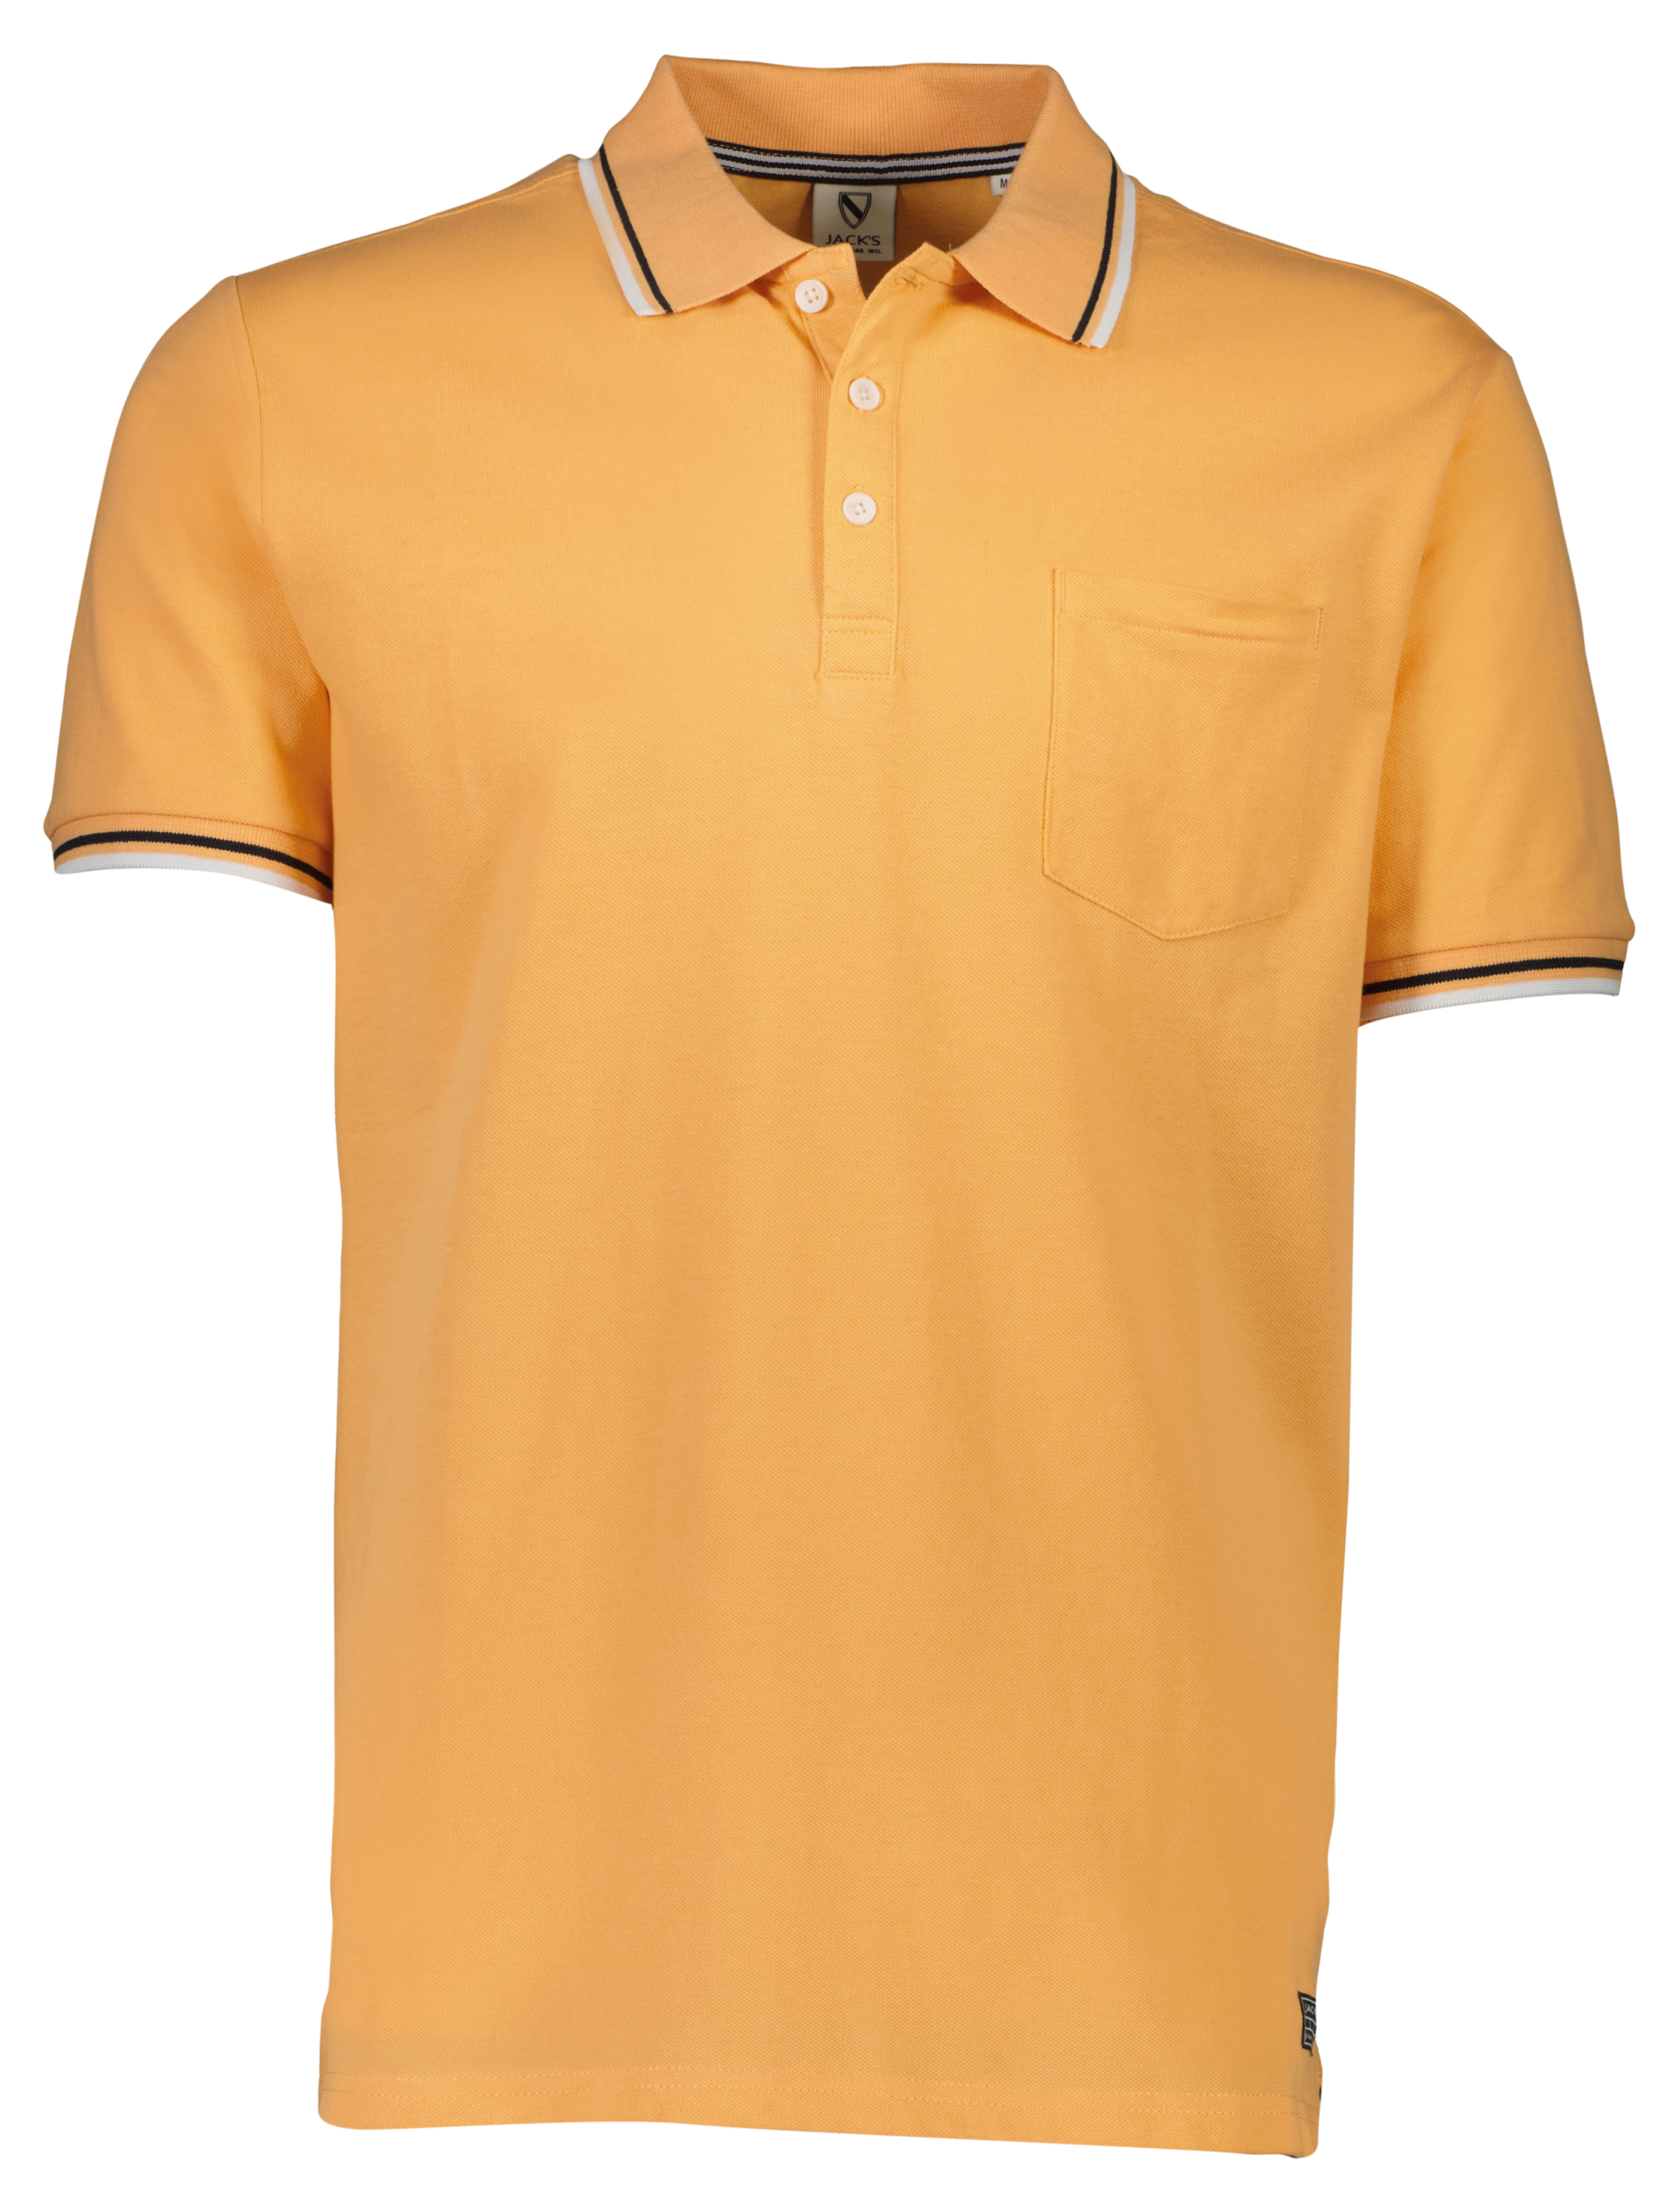 Jack's Poloshirt orange / coral